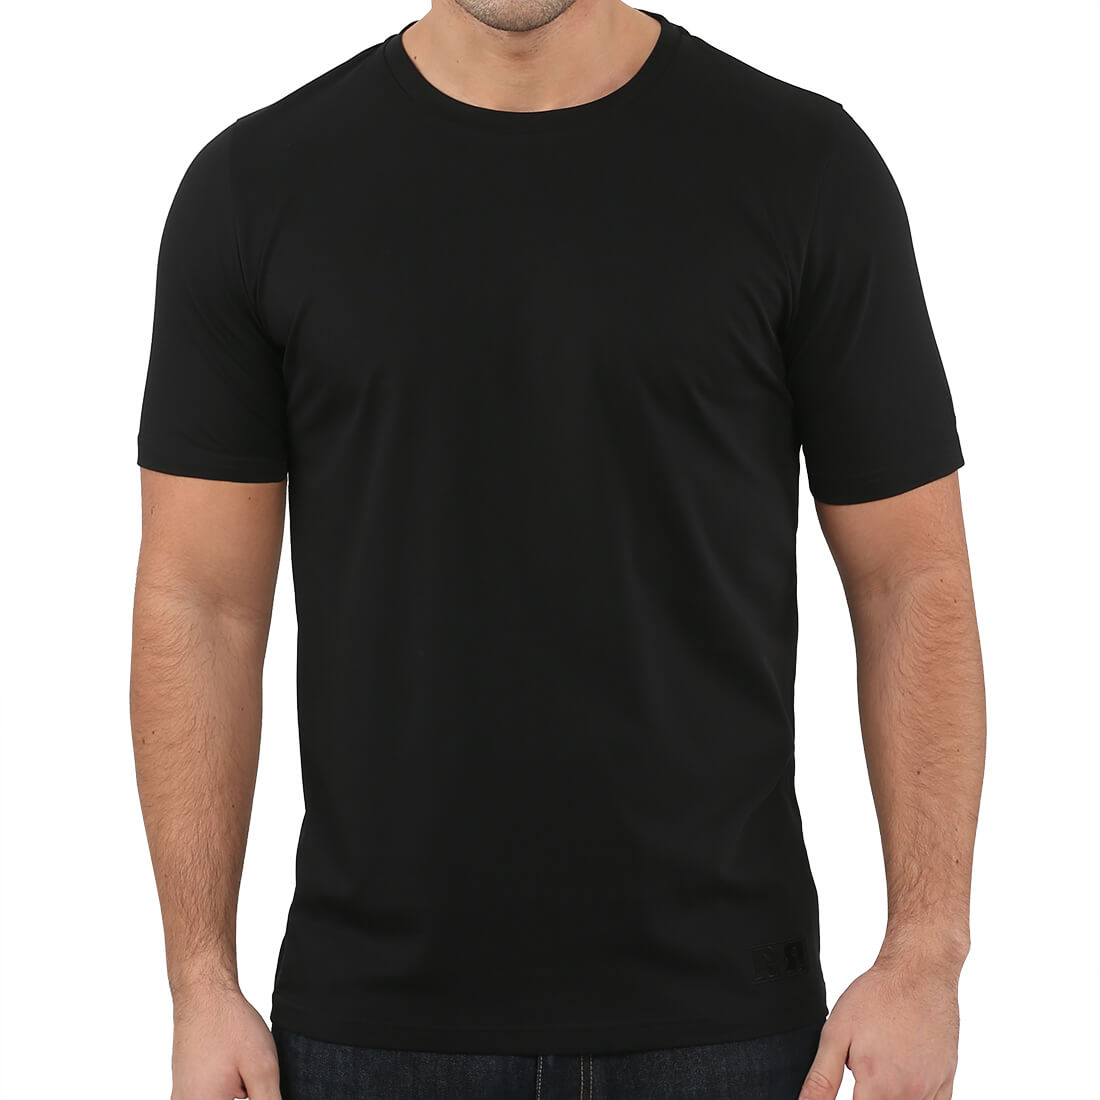 Buy > vintage black t shirt mens > in stock